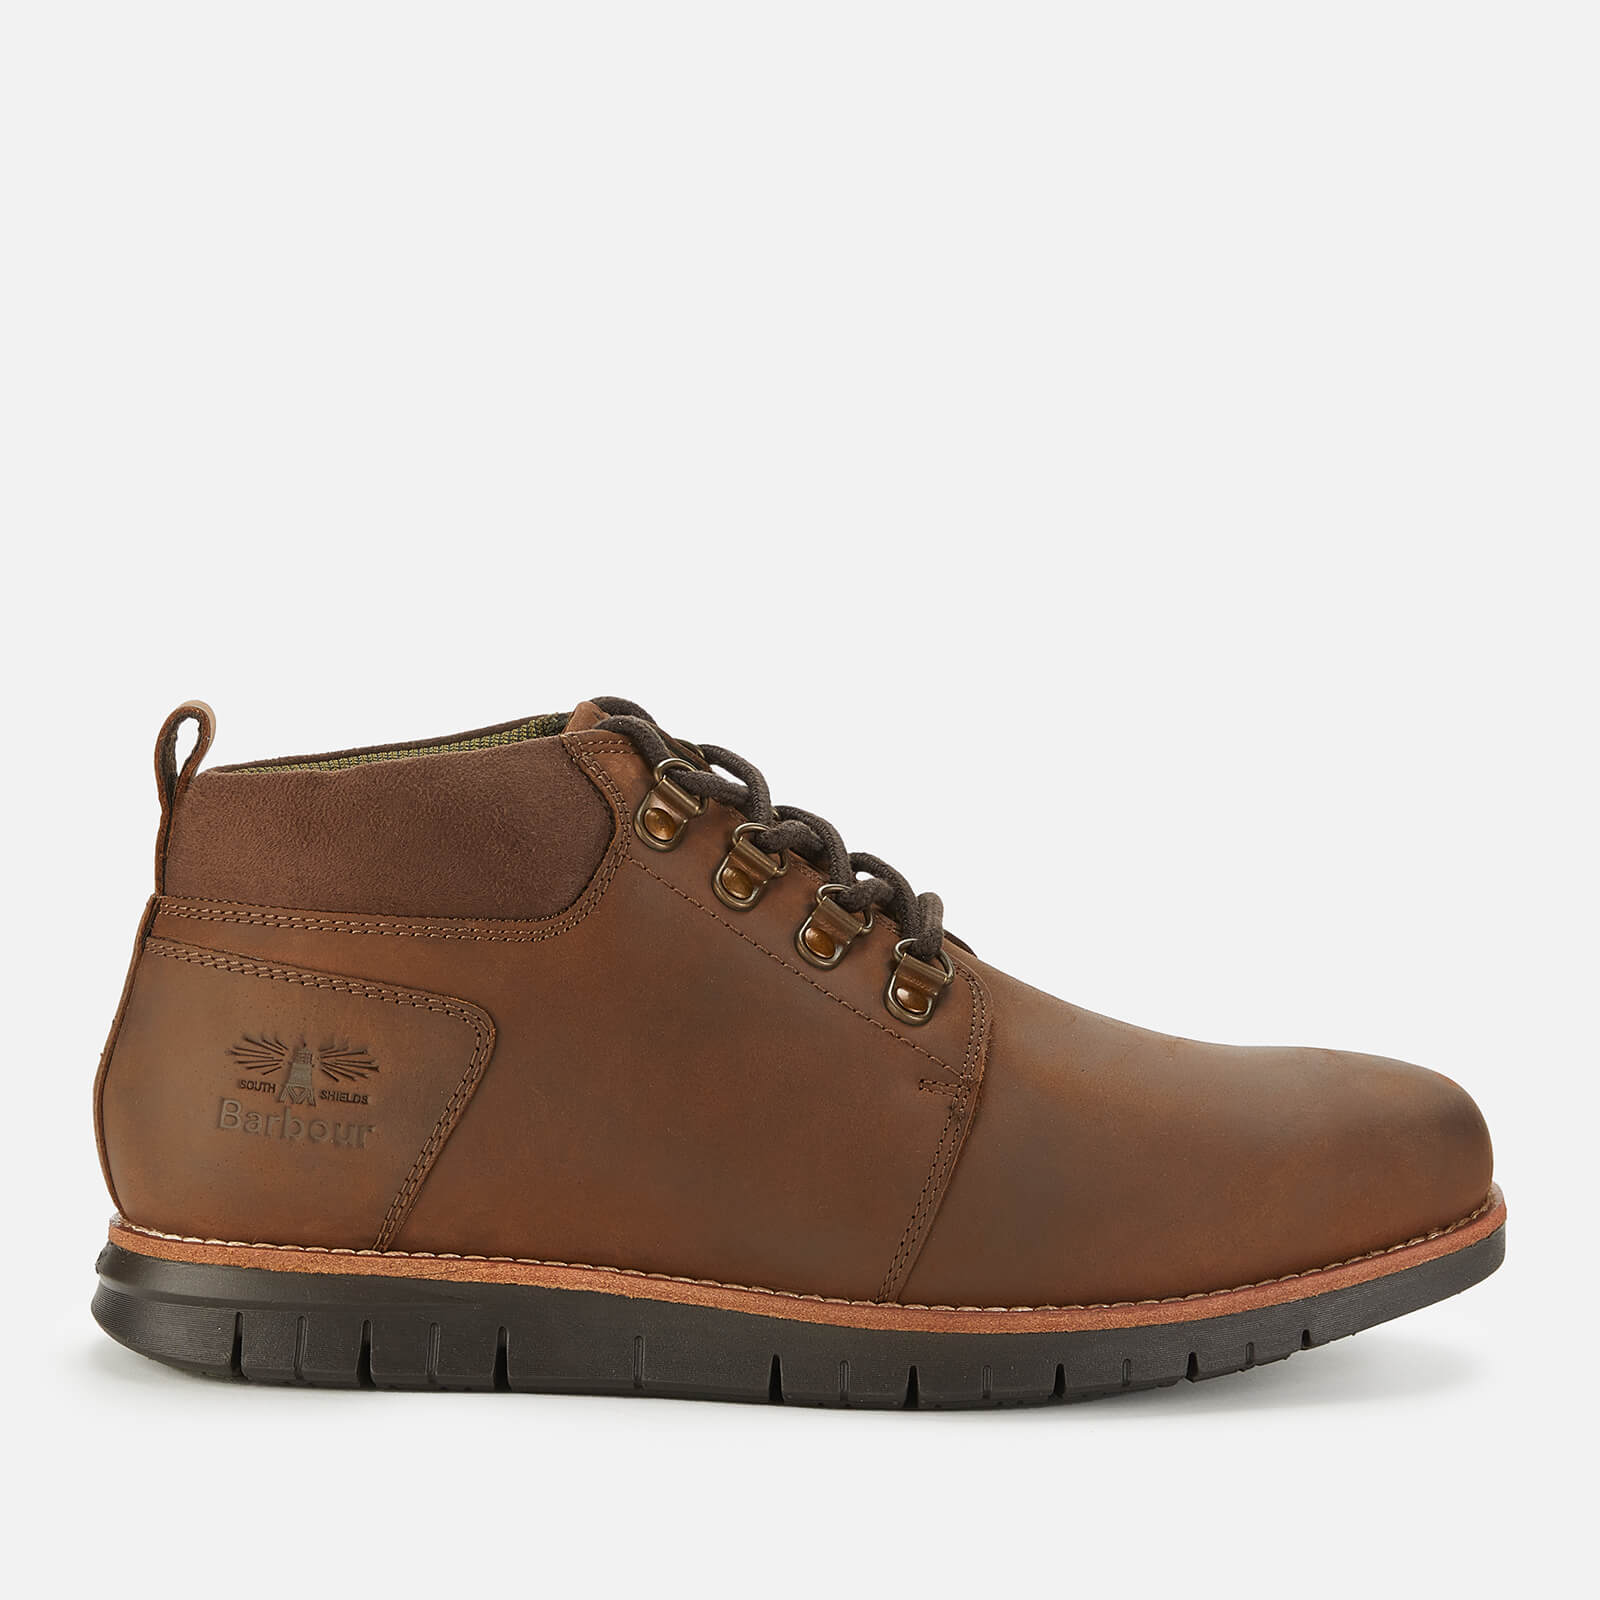 Barbour Men's Albemarle Leather Chukka Boots - Dark Brown - UK 7